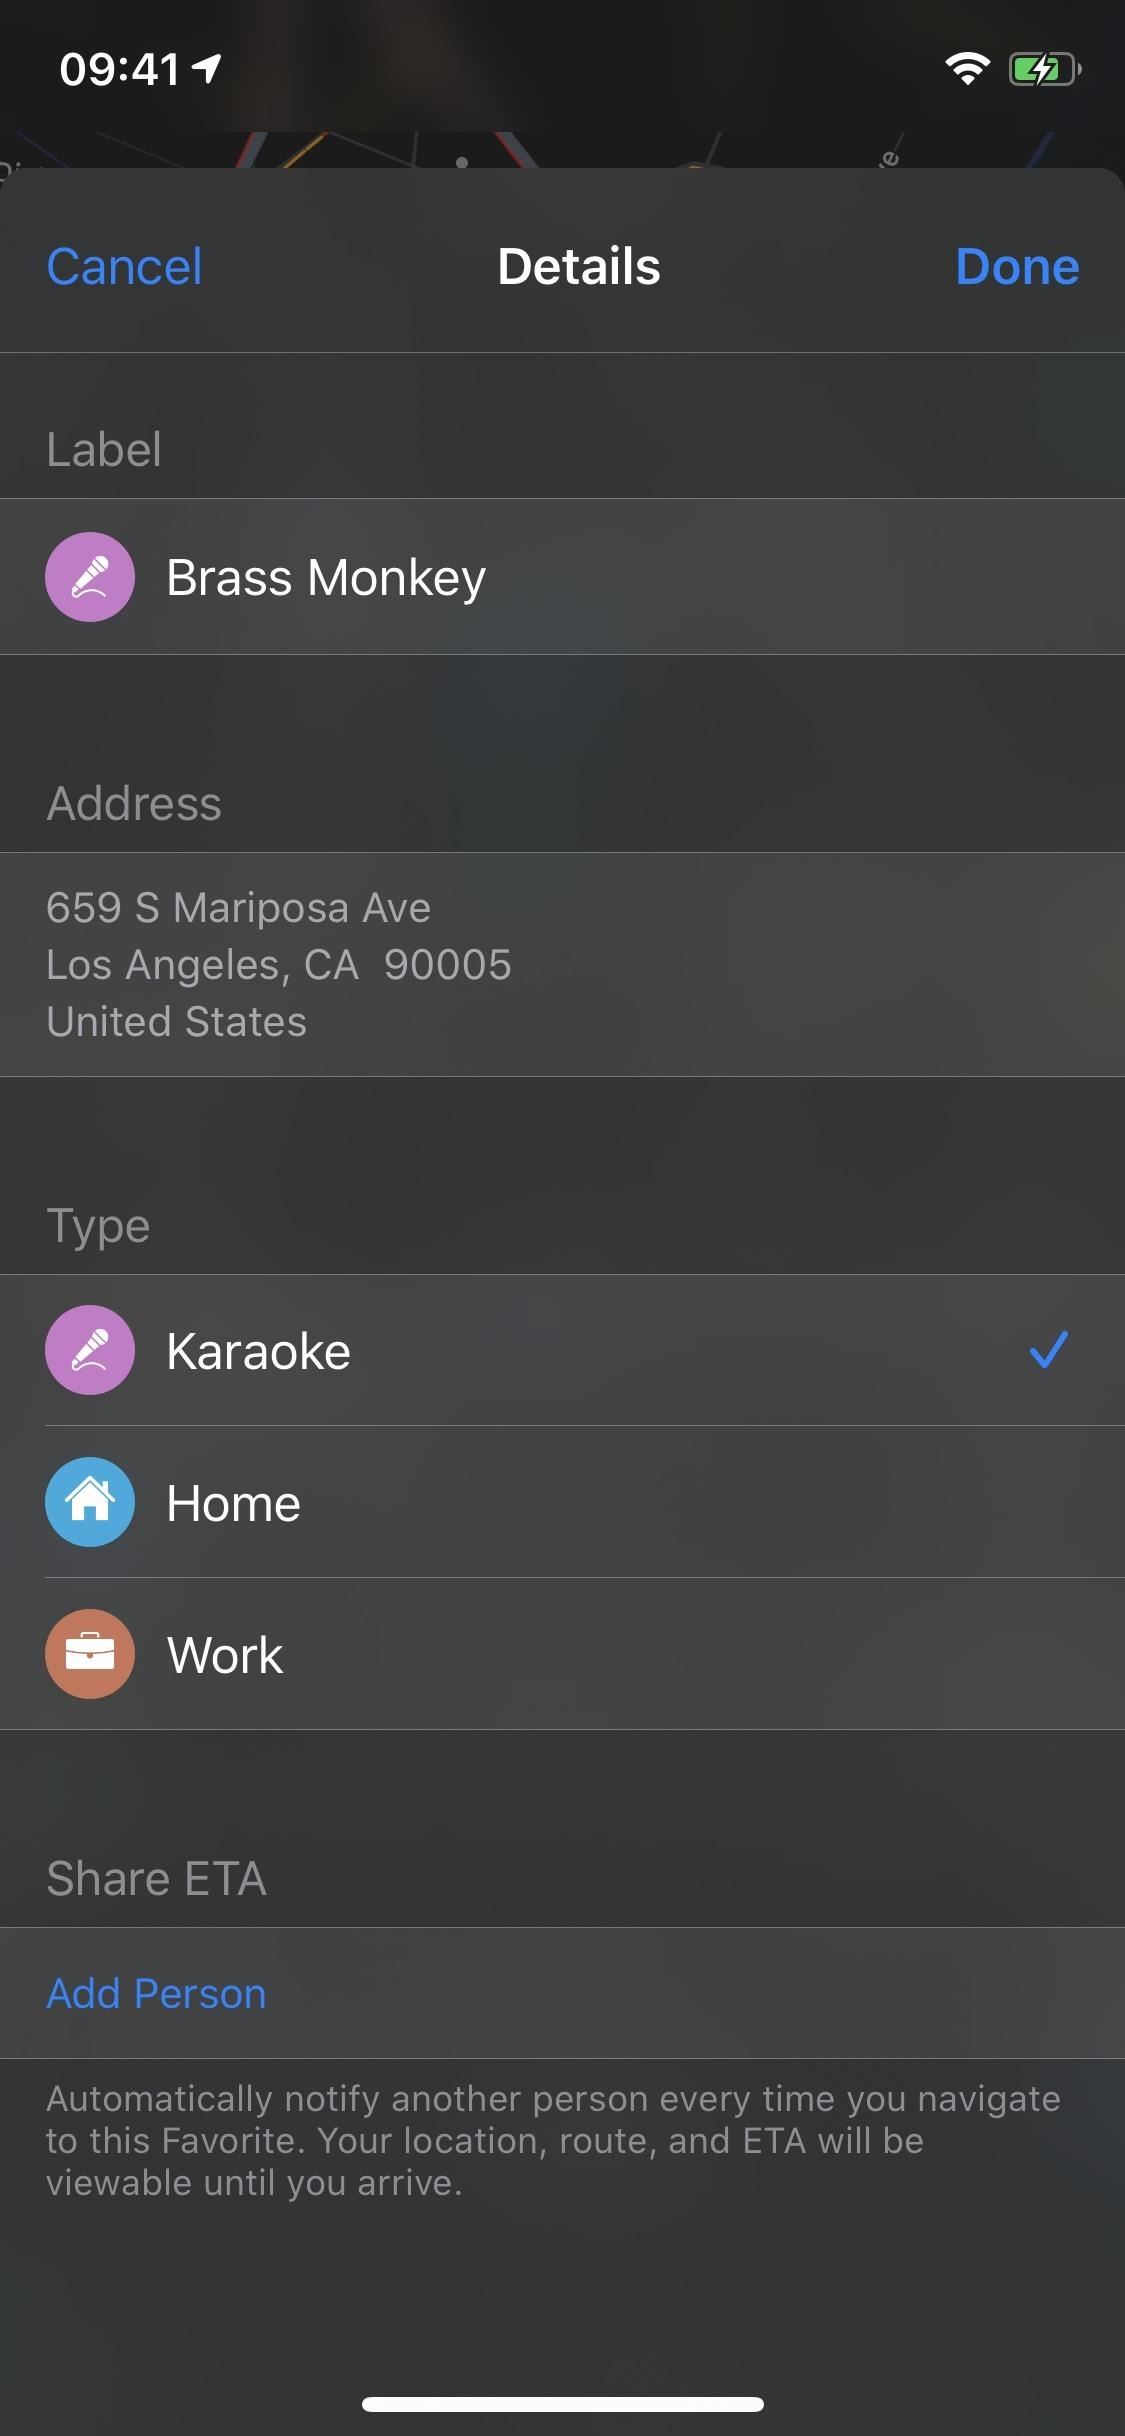 How to Add, Rearrange, Edit & Delete Favorite Locations in Apple Maps in iOS 13